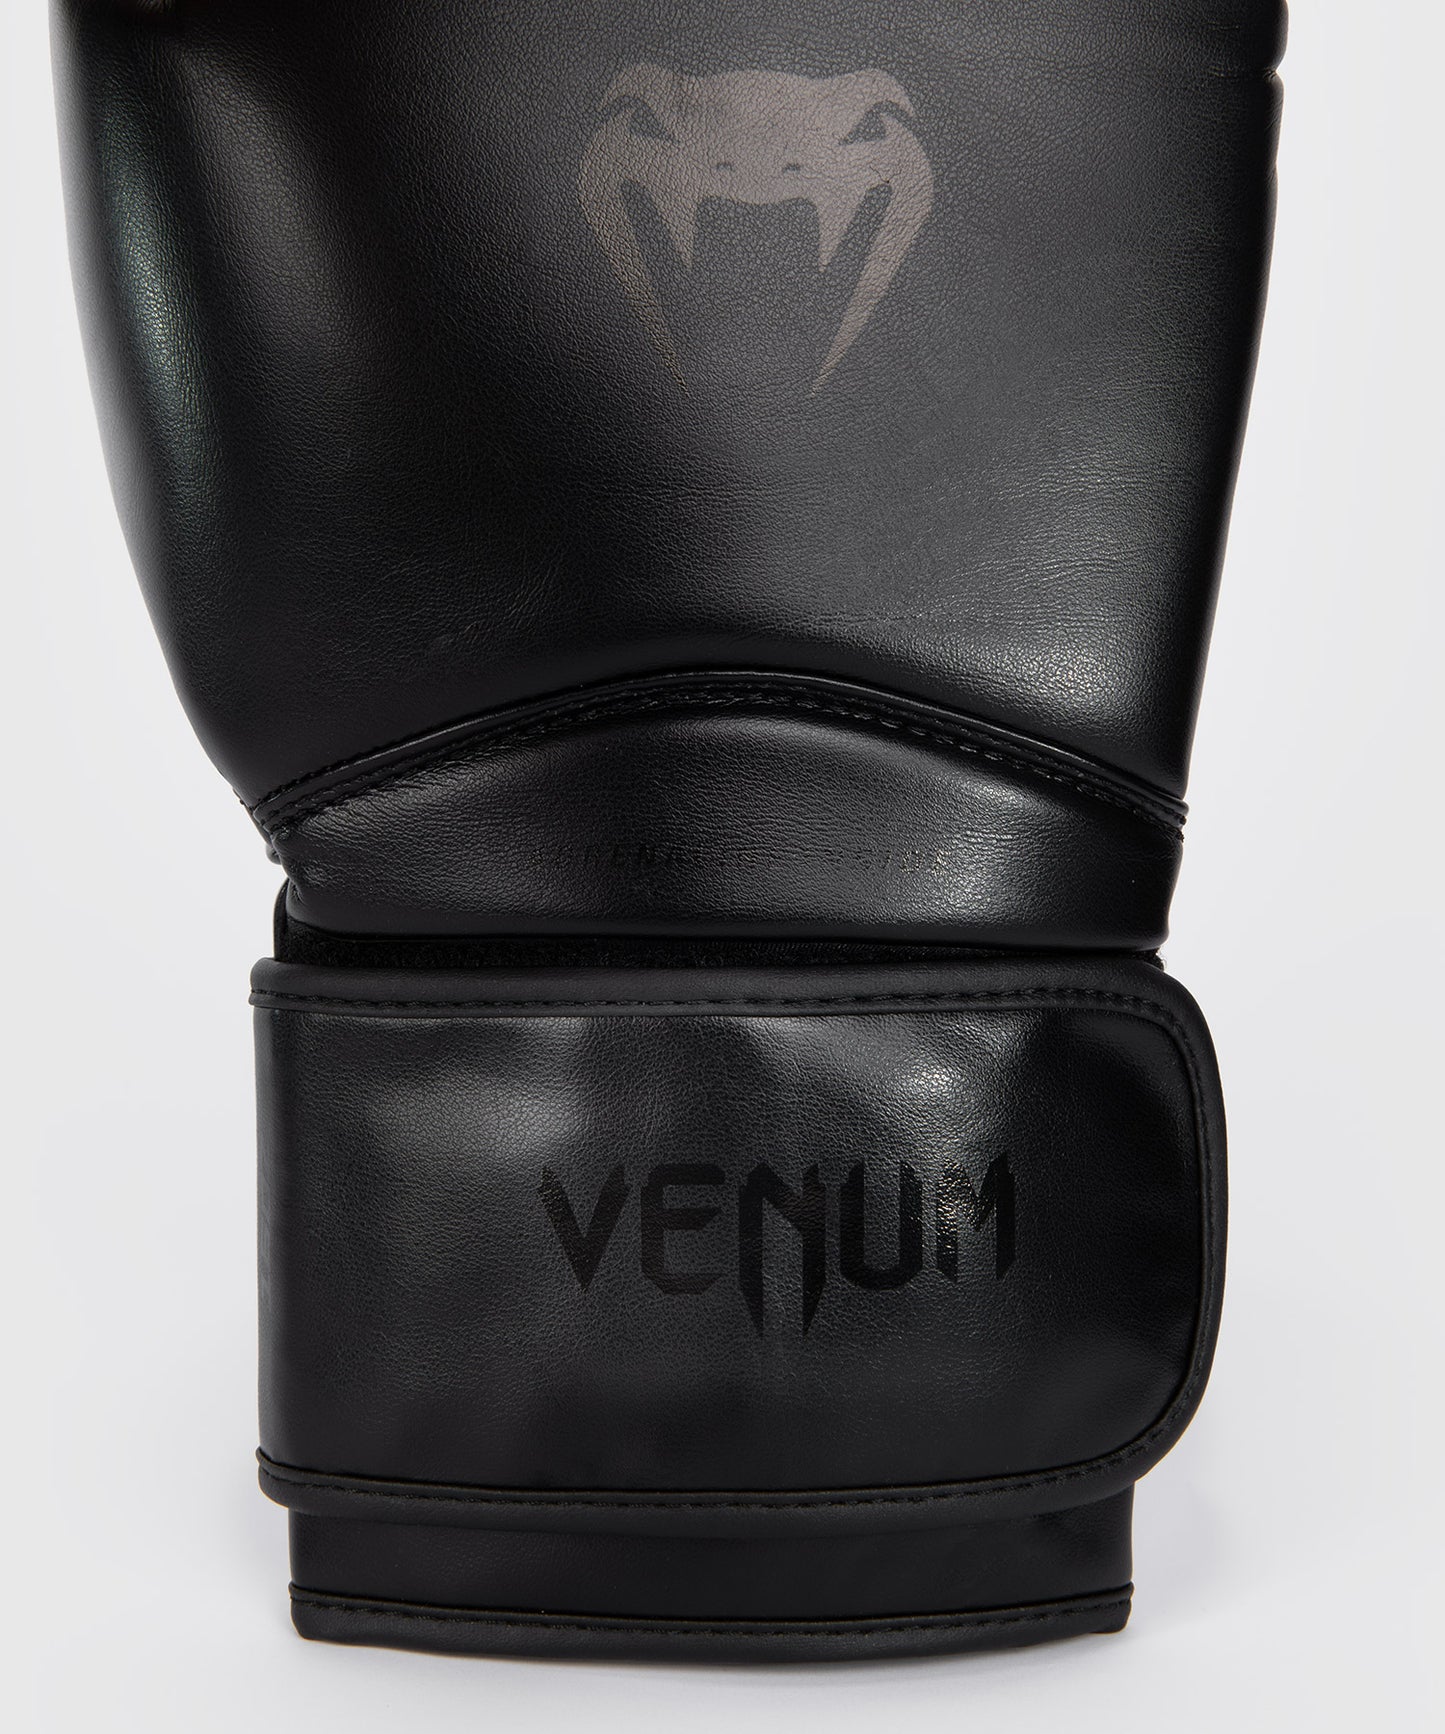 Venum Contender 1.5 Boxing Gloves - Black/Black